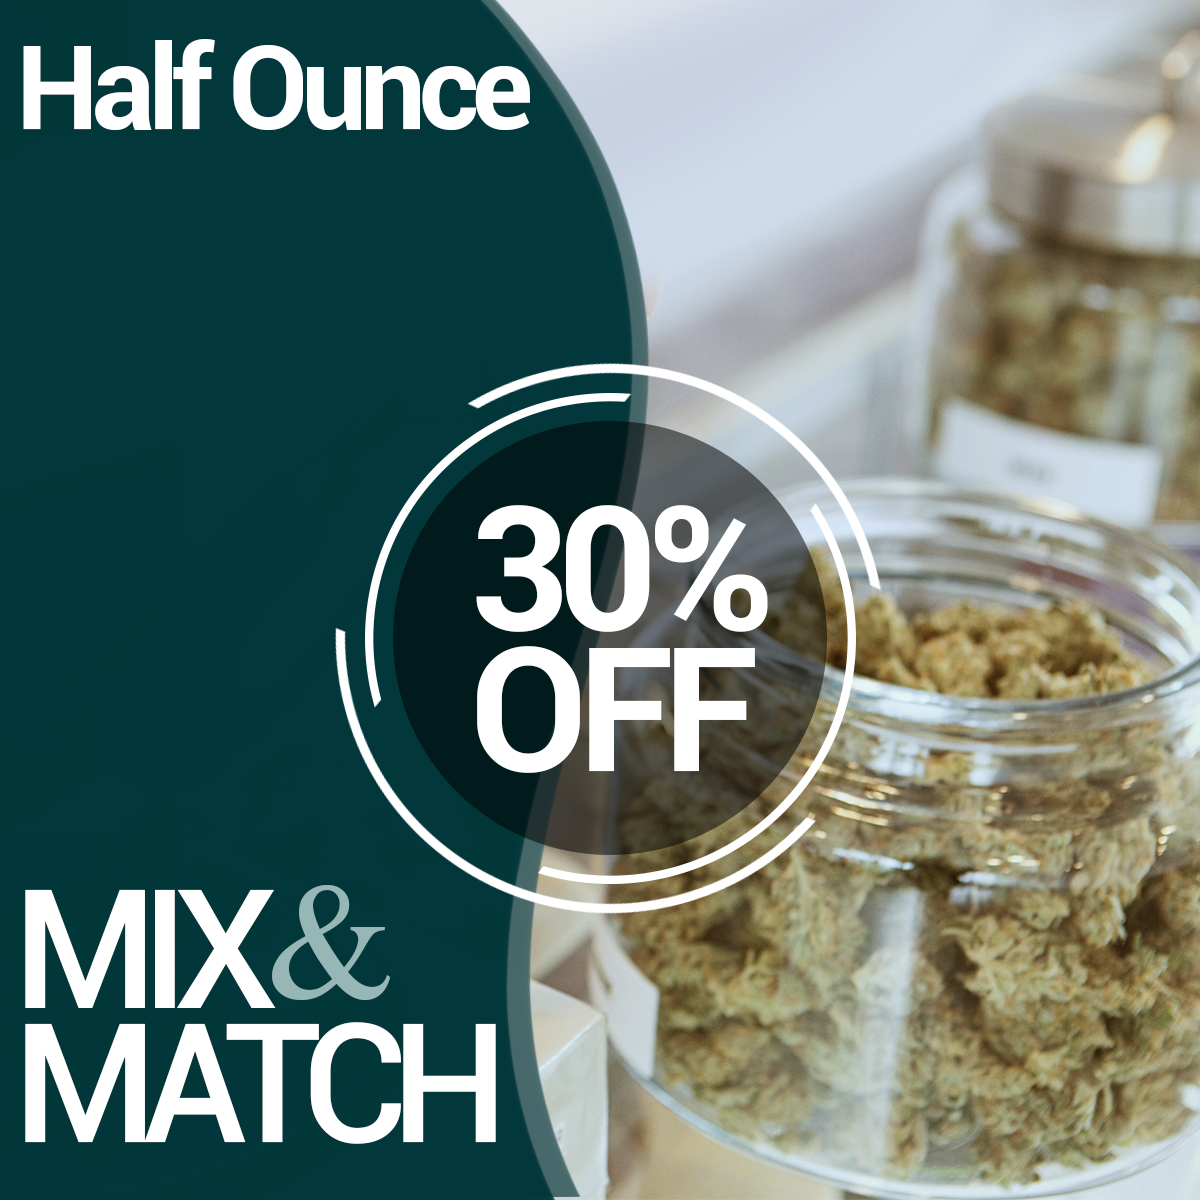 Half Ounce Cannabis - Mix and Match